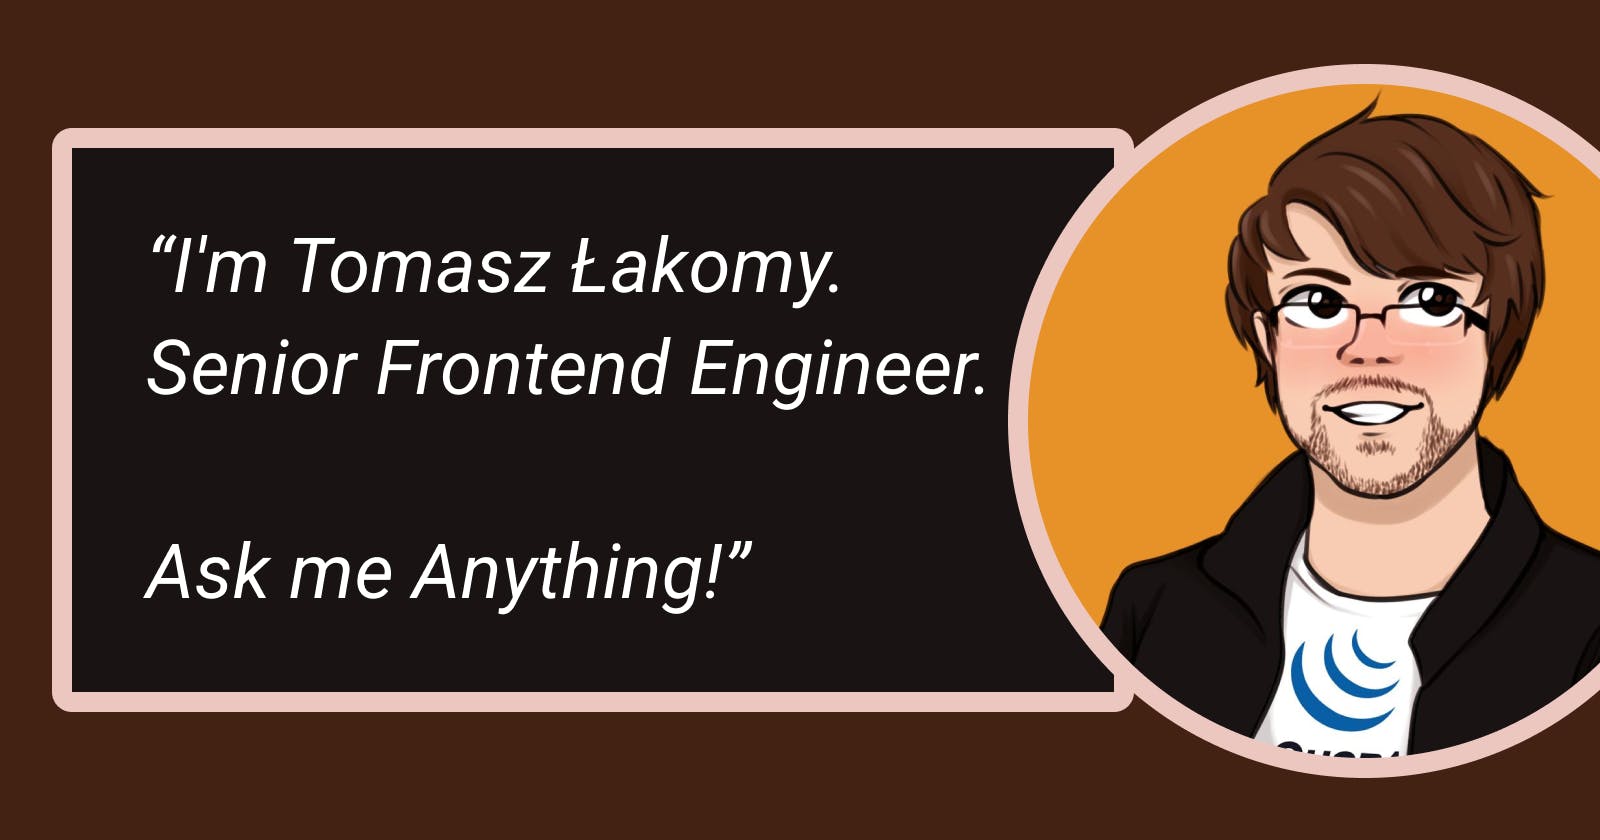 AMA: I'm Tomasz Łakomy. Senior Frontend Engineer. Ask me Anything!